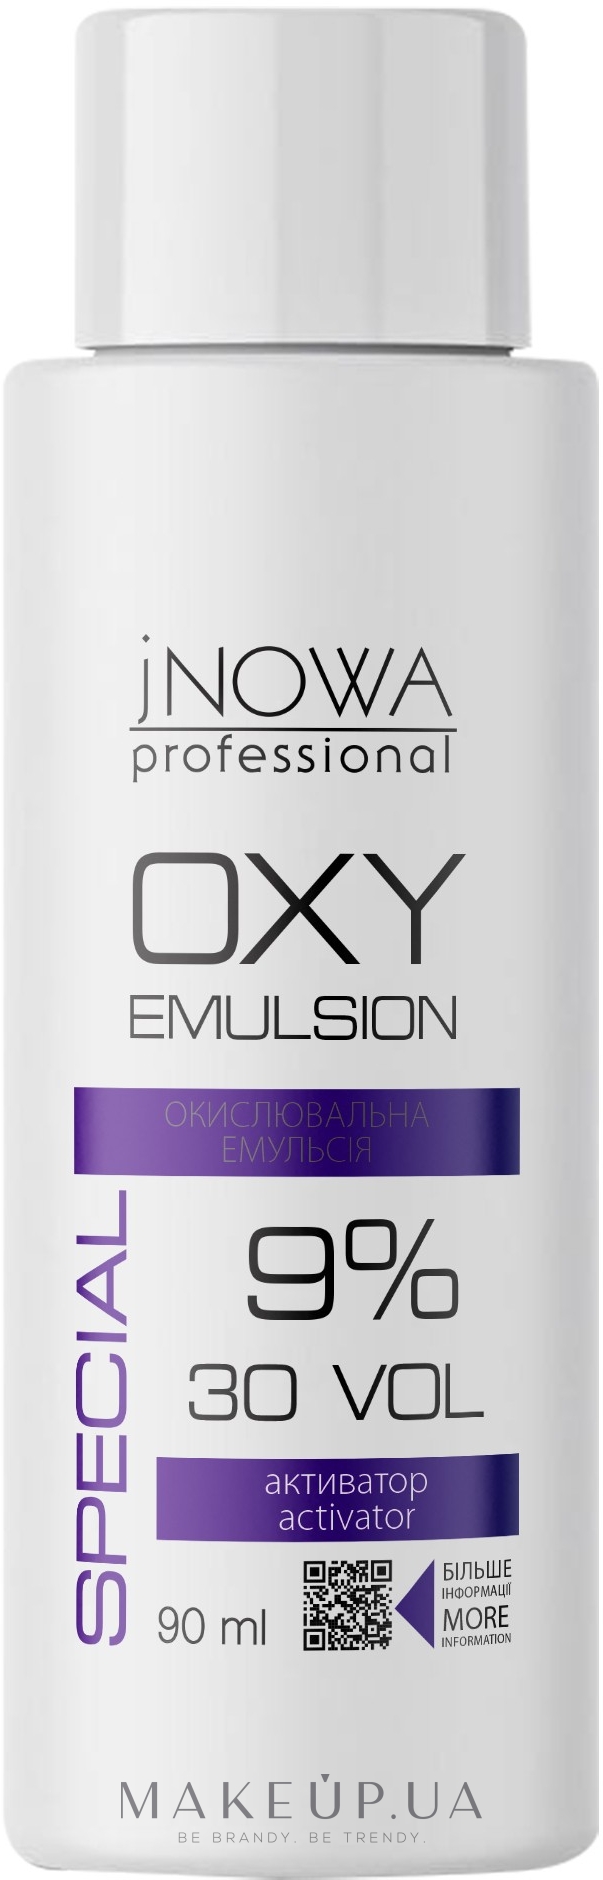 Окислительная эмульсия, 9 % - jNOWA Professional OXY 9 % (30 vol) — фото 90ml